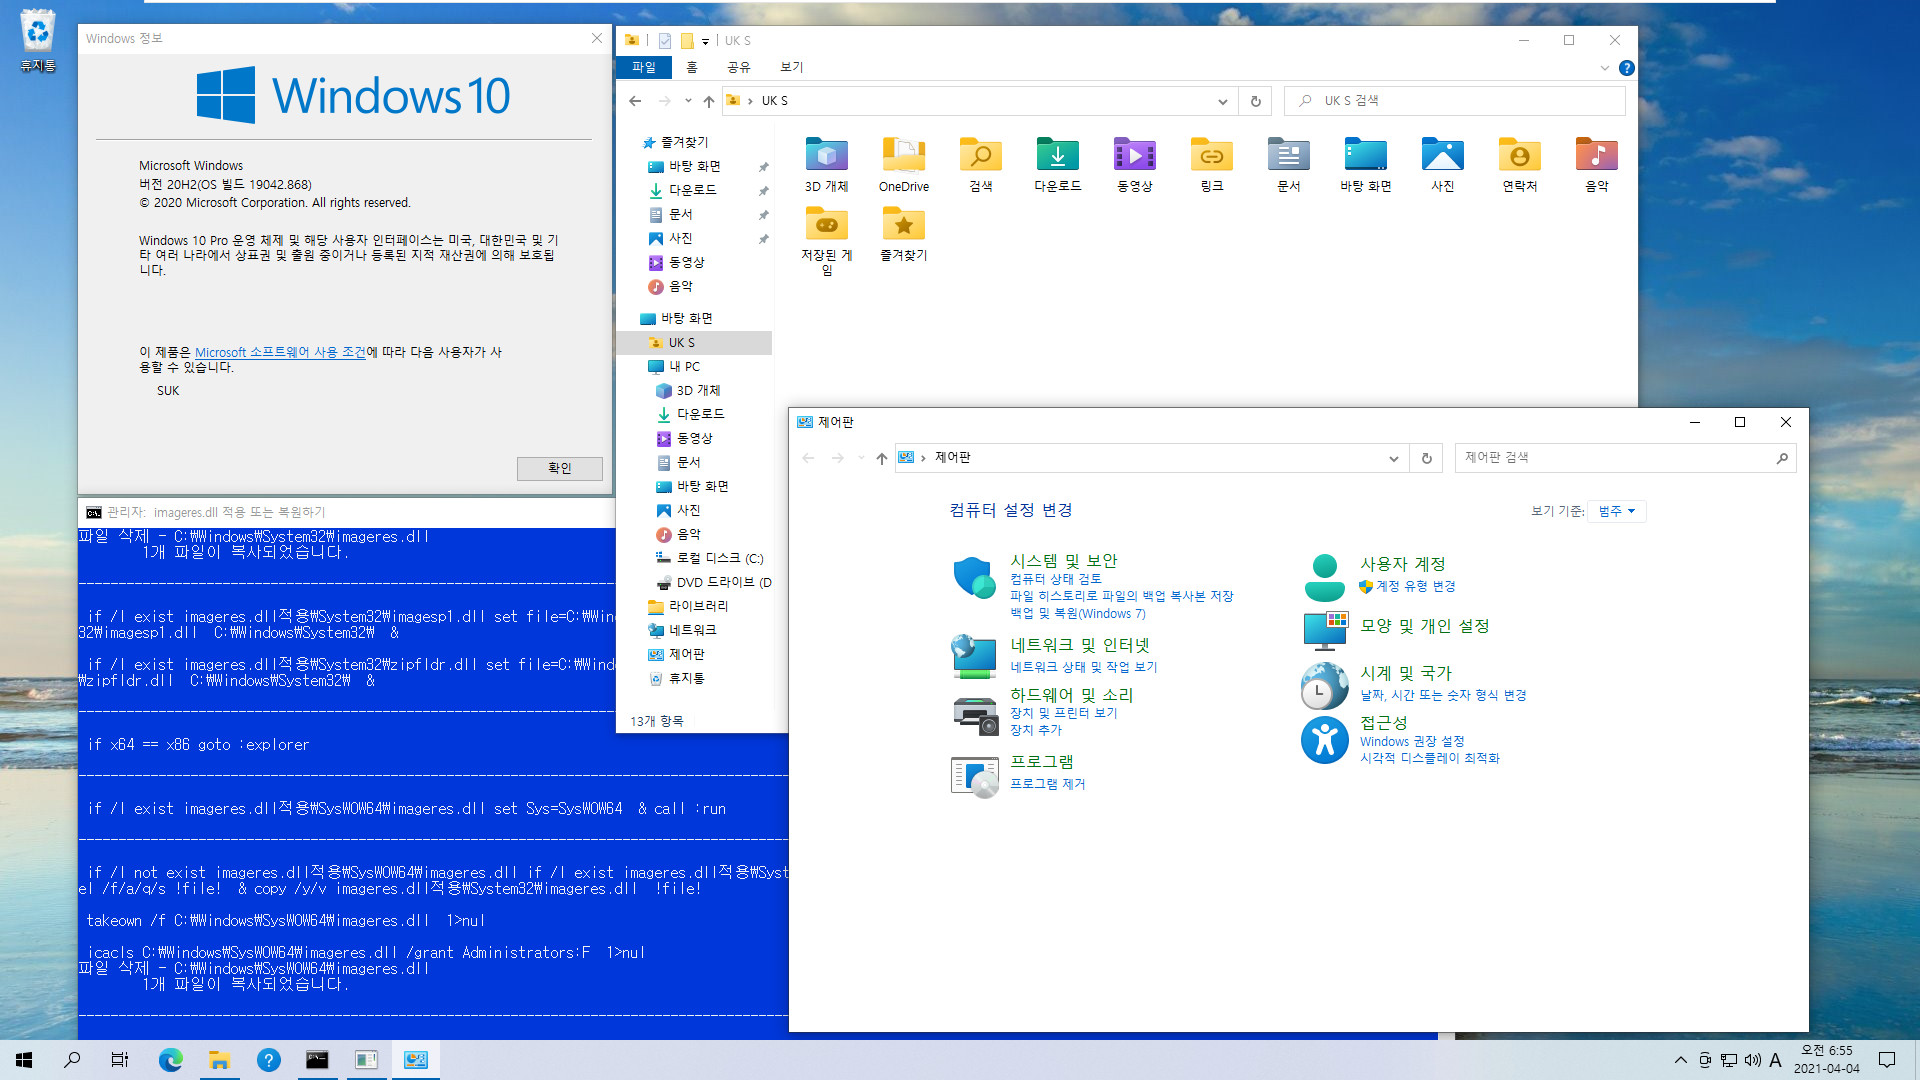 imageres.dll 윈도우 10 버전 1809용 파일이고 윈도우 7 라이브러리 안에 폴더 아이콘들이 정상 표시되기 때문에 윈도우 7 종료와 부팅 배경화면만 정상 표시되도록 7 원본 imageres.dll을 합쳐서 테스트 2021-04-04_065545.jpg